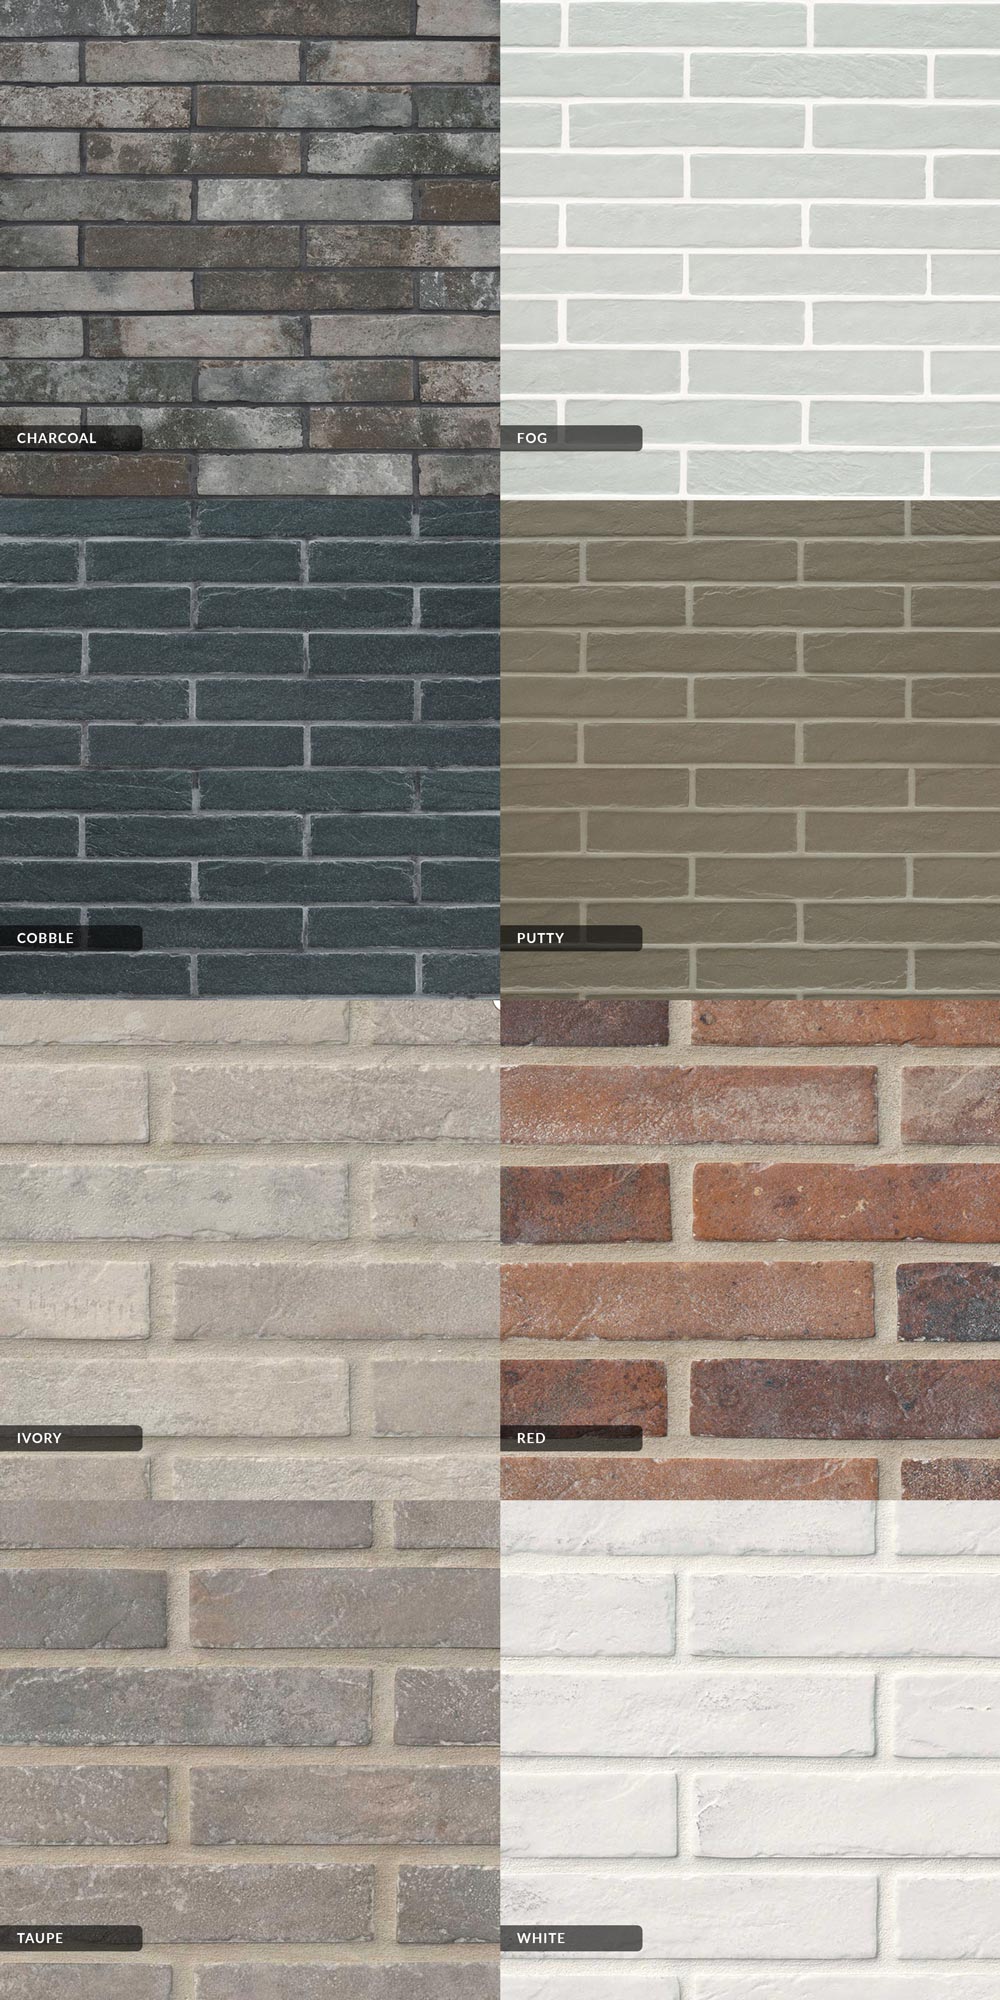 MSI Brickstone Porcelain Tile for Backsplashes, Floors, and Shower Walls Image